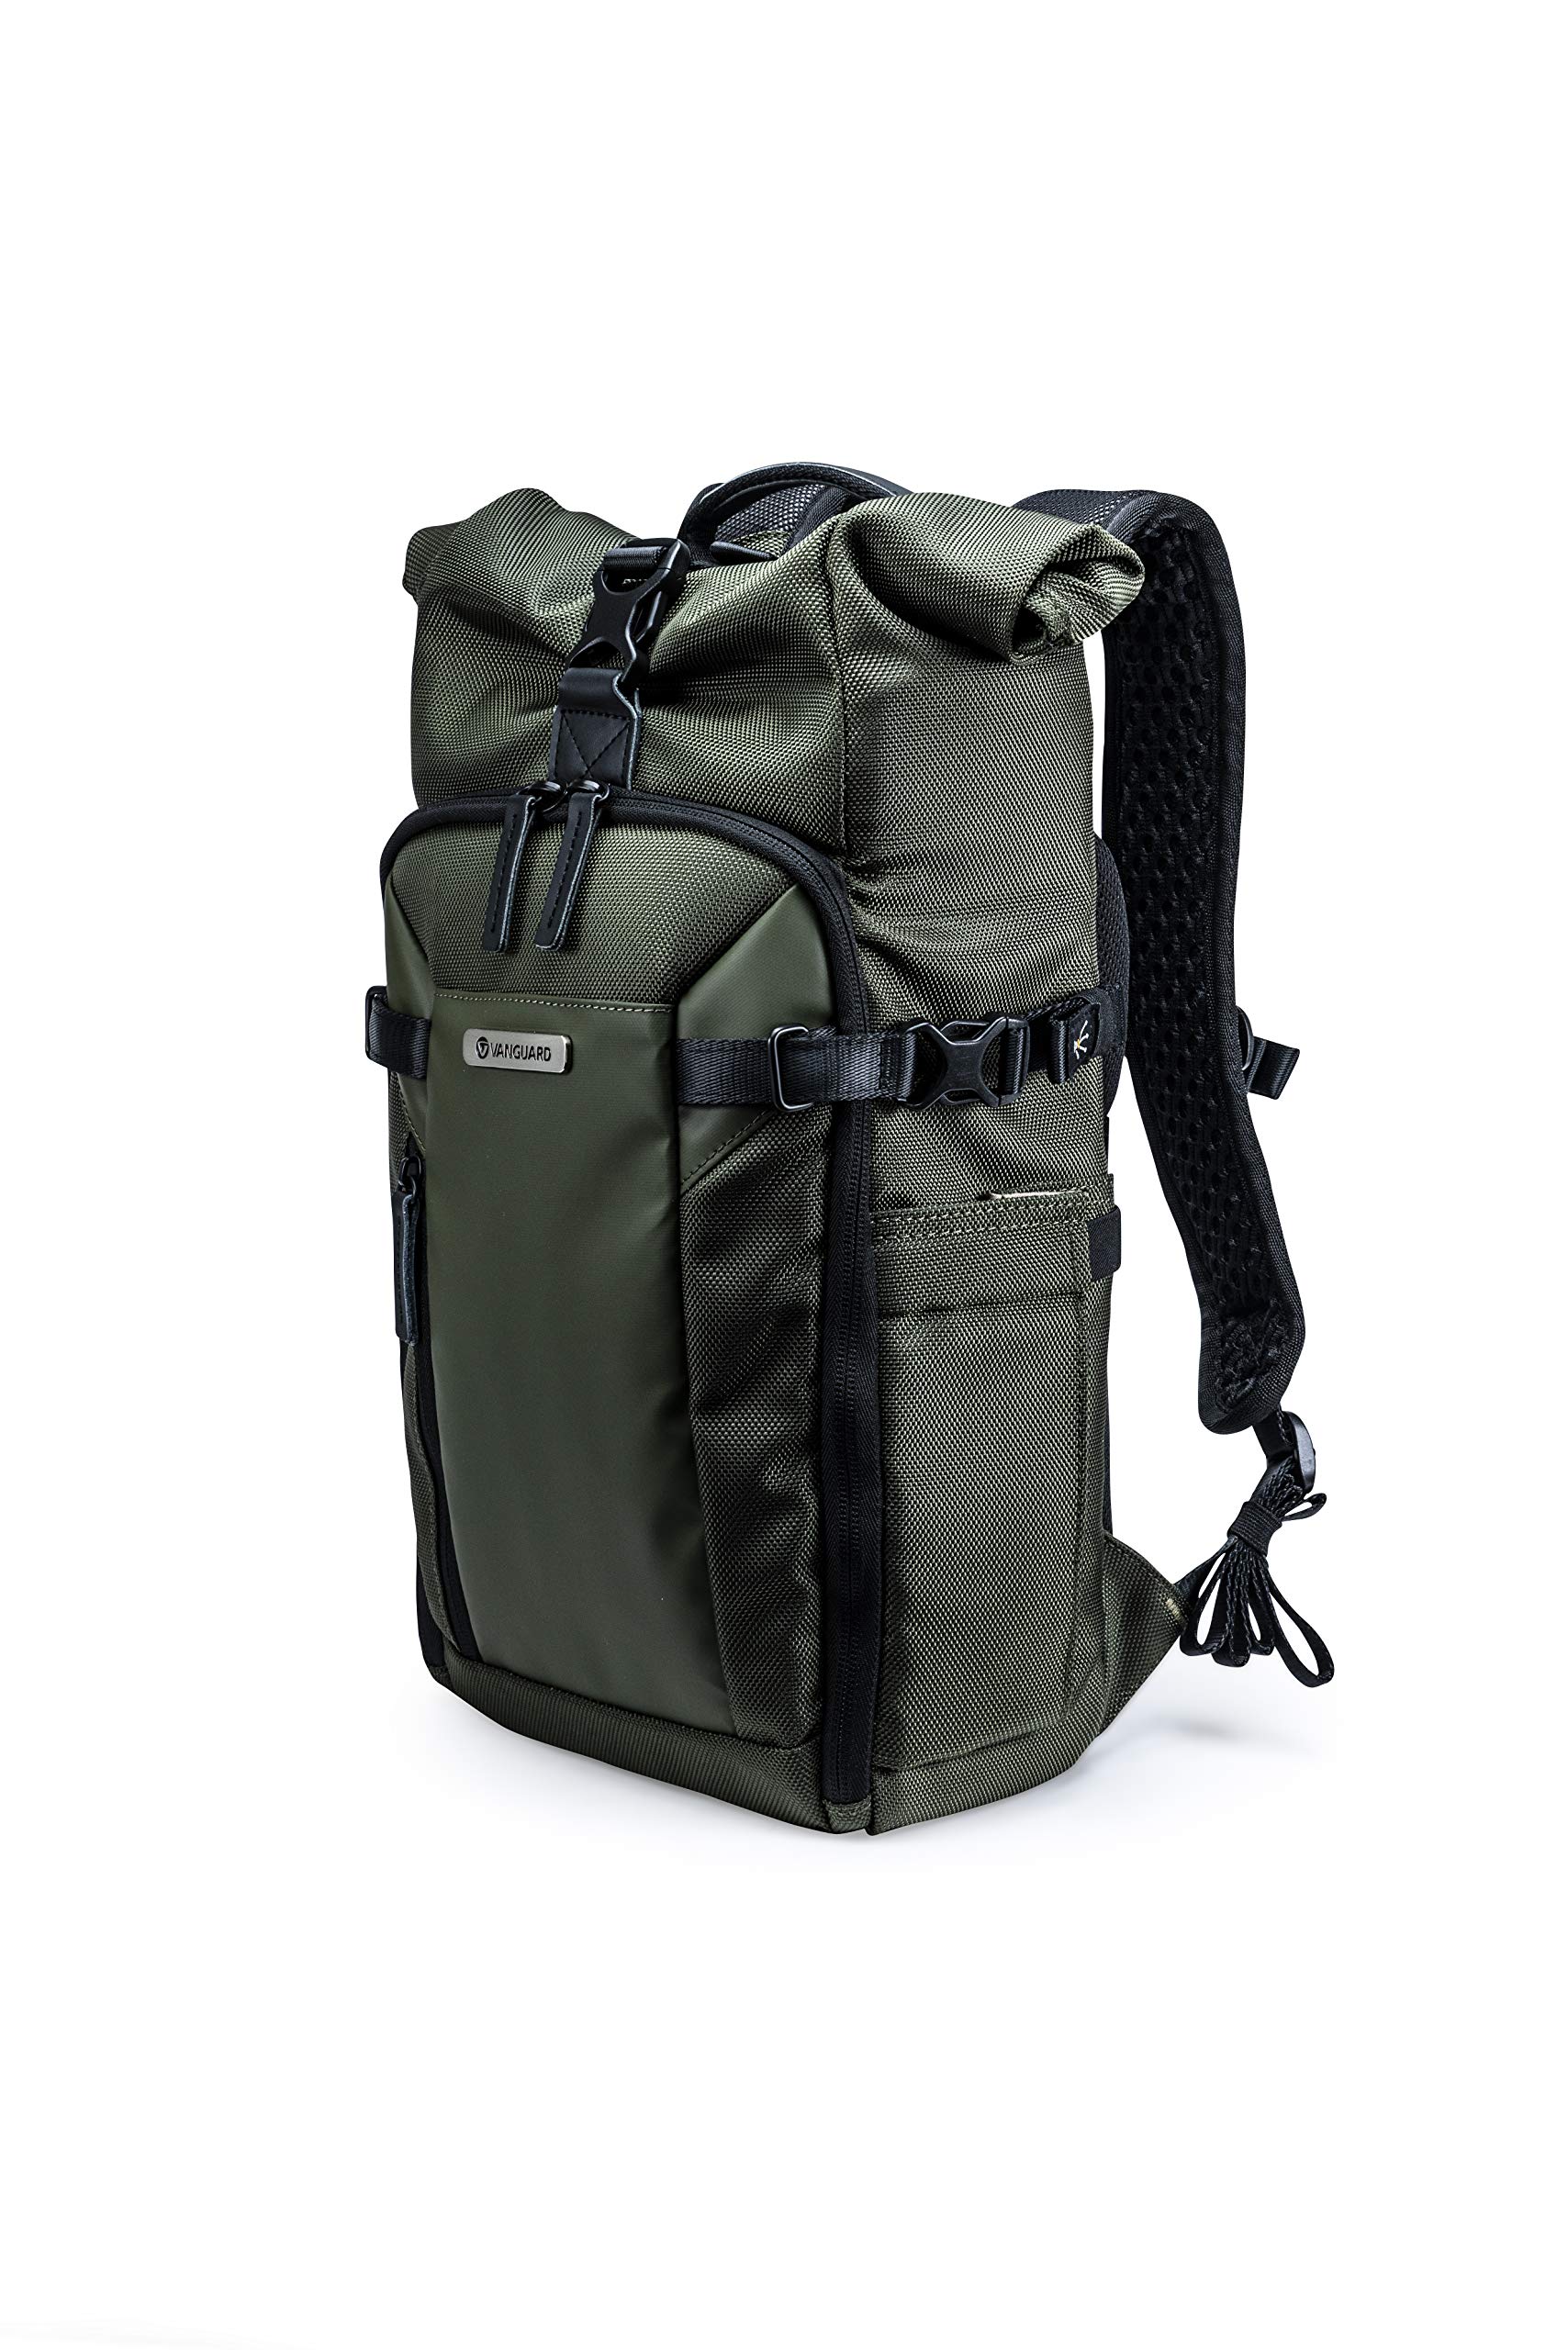 Vanguard VEO Select 43RB Rolltop Camera Backpack, Green